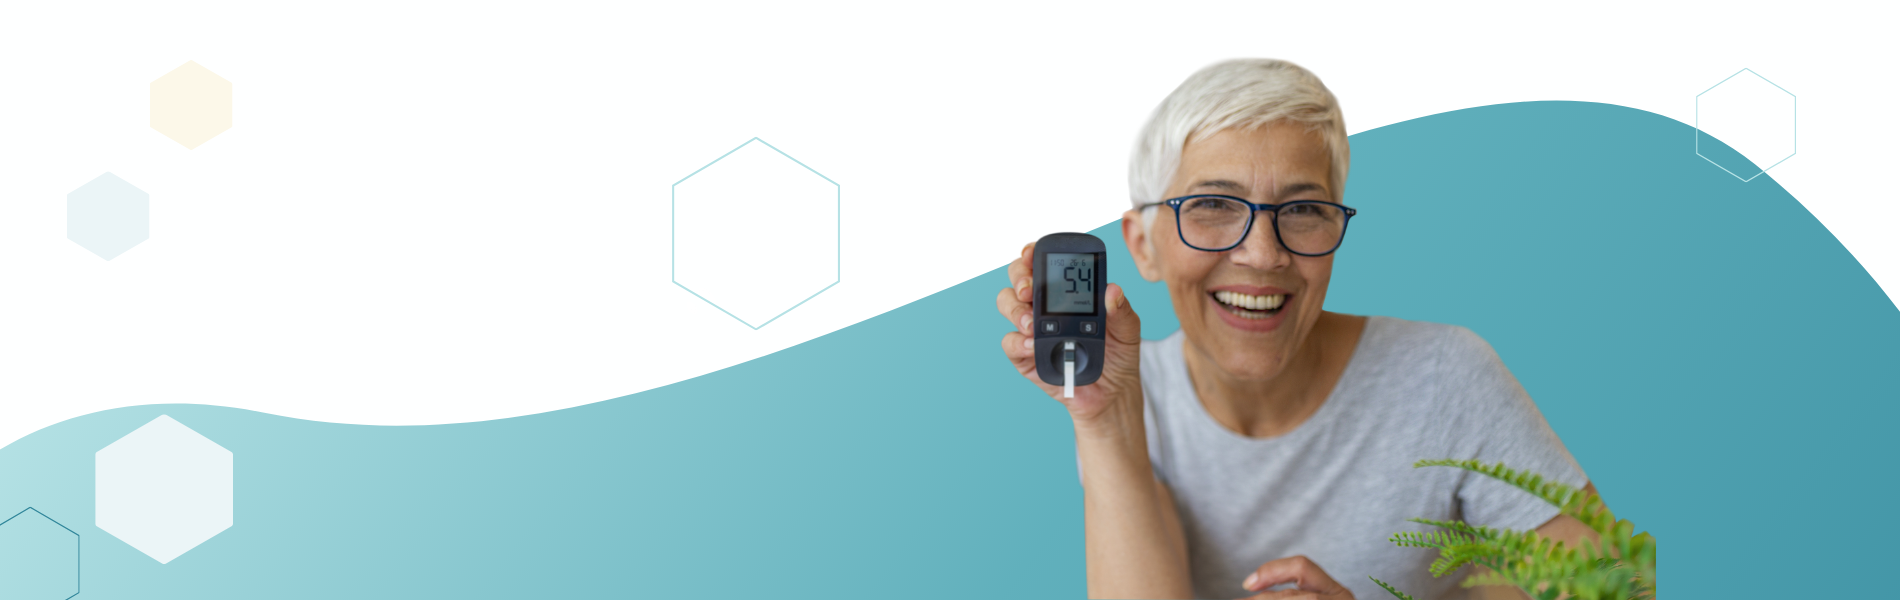 A woman holding a blood sugar monitor